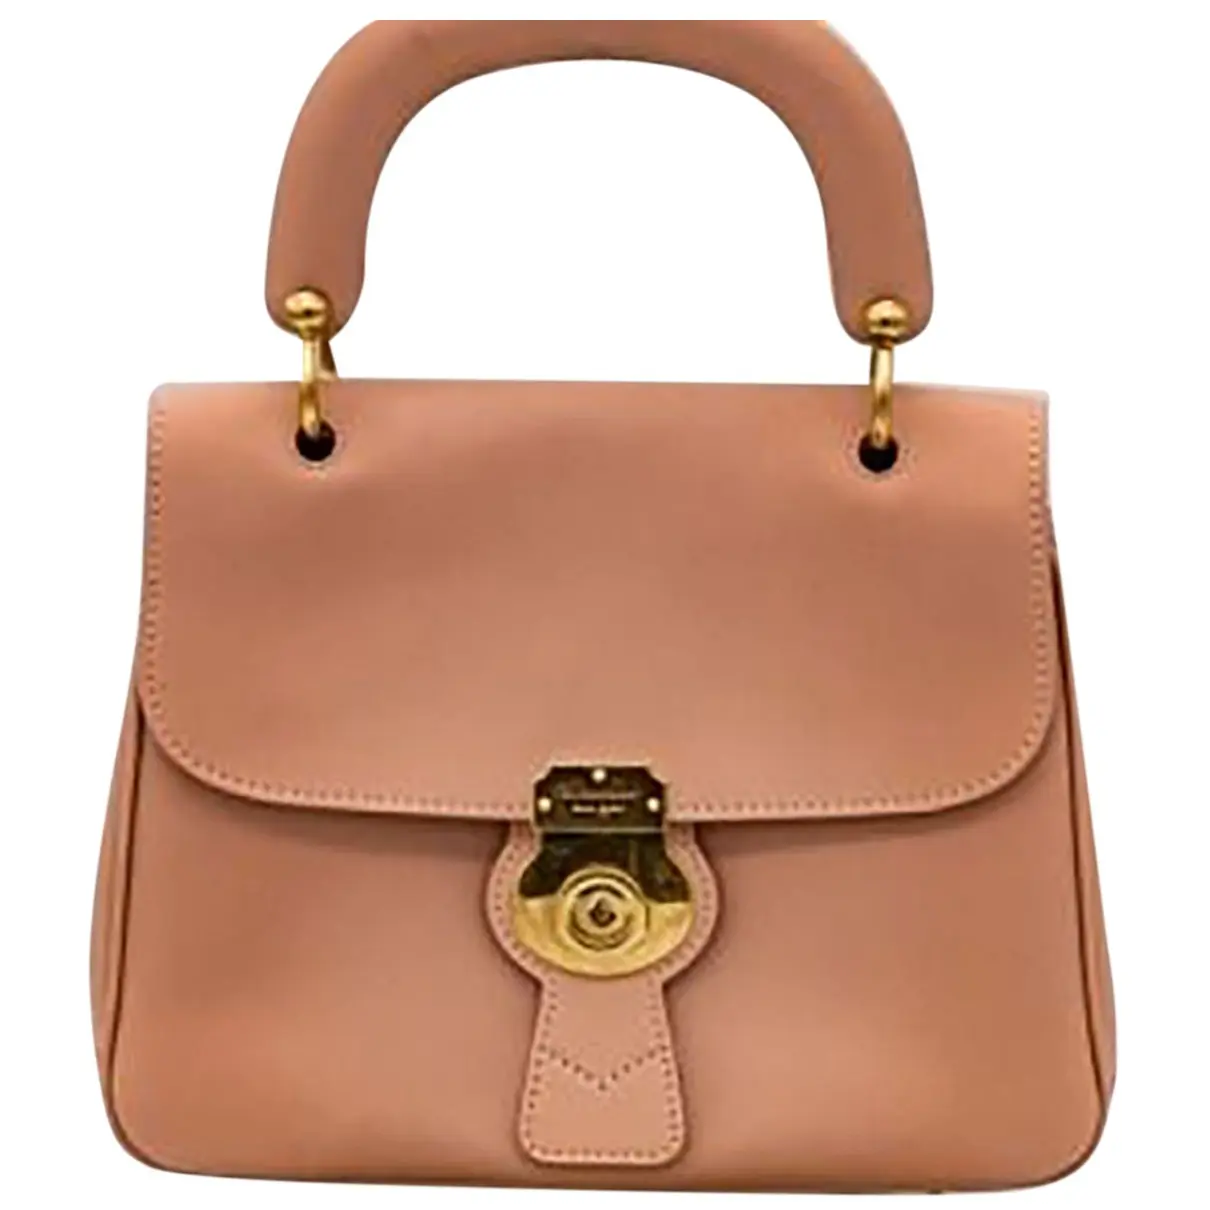 DK 88 leather handbag Burberry